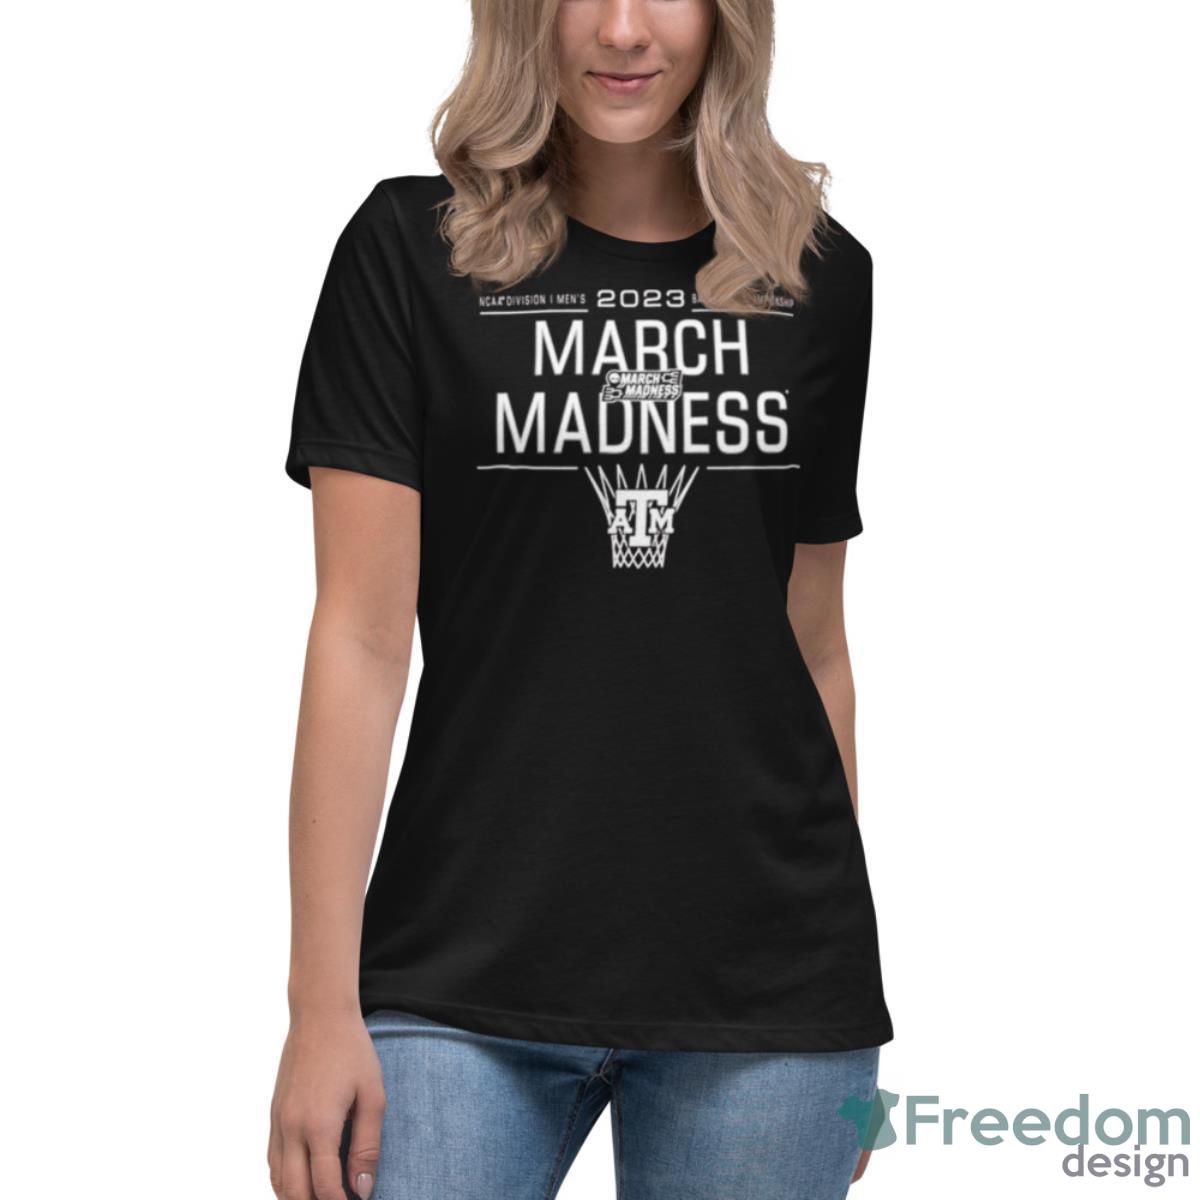 Texas A&M Aggies 2023 NCAA division I Men’s Basketball championship March Madness shirt